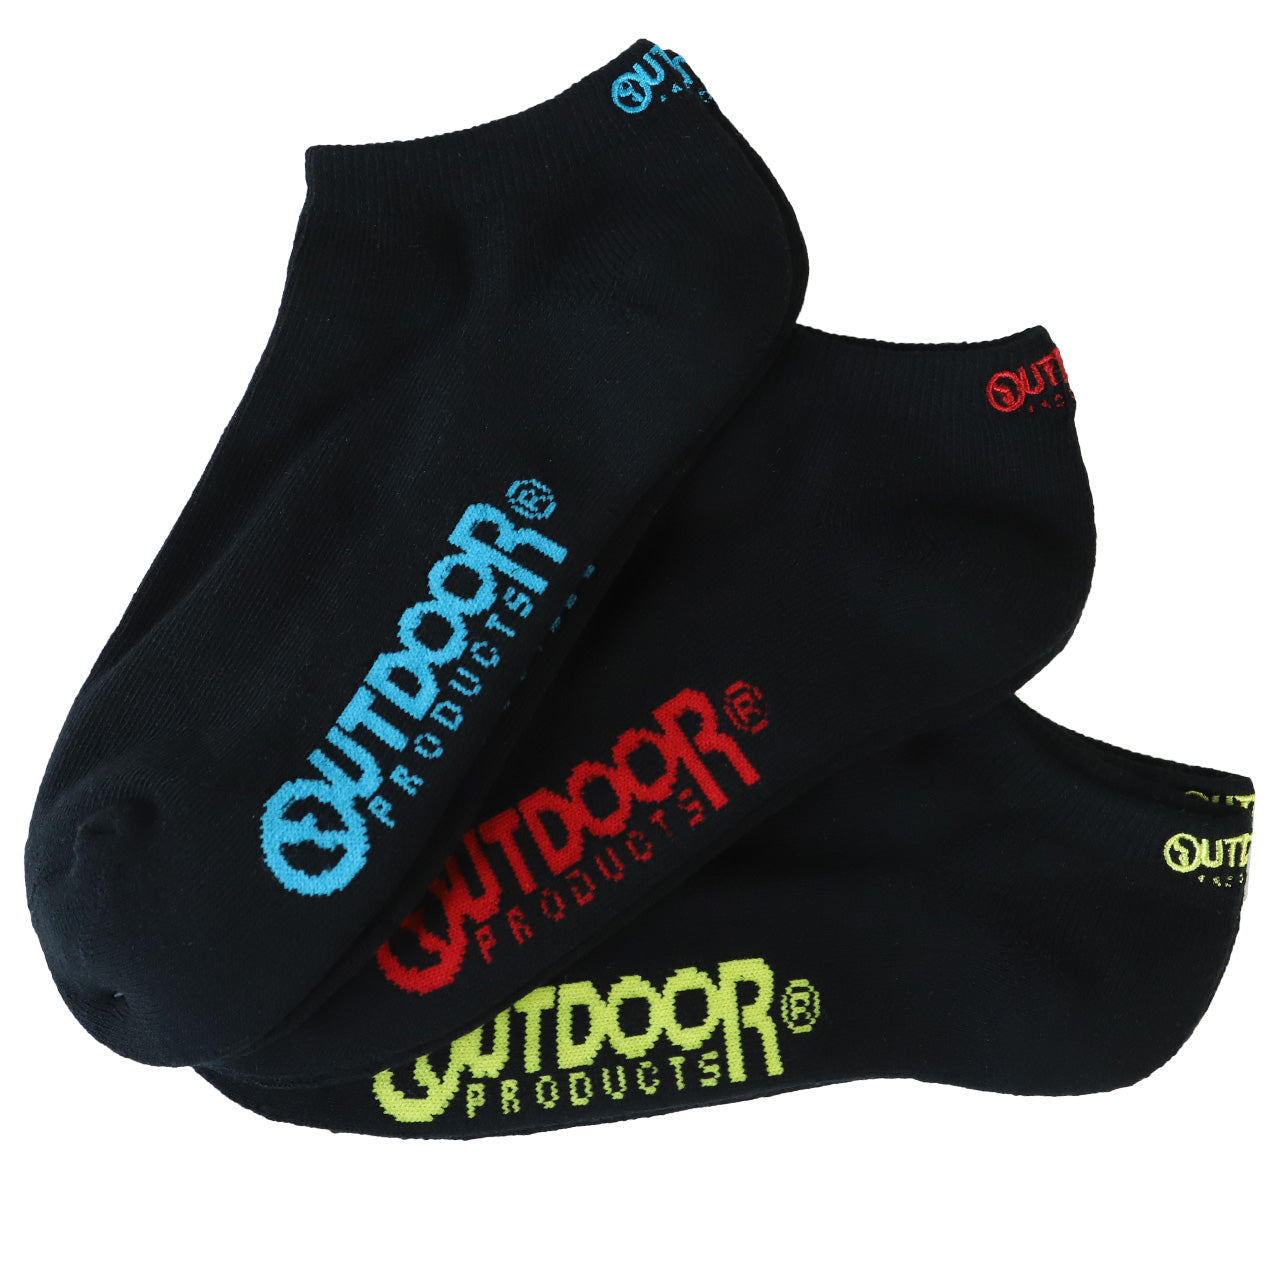 OUTDOOR PRODUCTS スニーカーソックス 3足組 25-27cm (メンズ ソックス 靴下 スニーカー丈 カジュアル 柄 3足セット アウトドアプロダクツ)